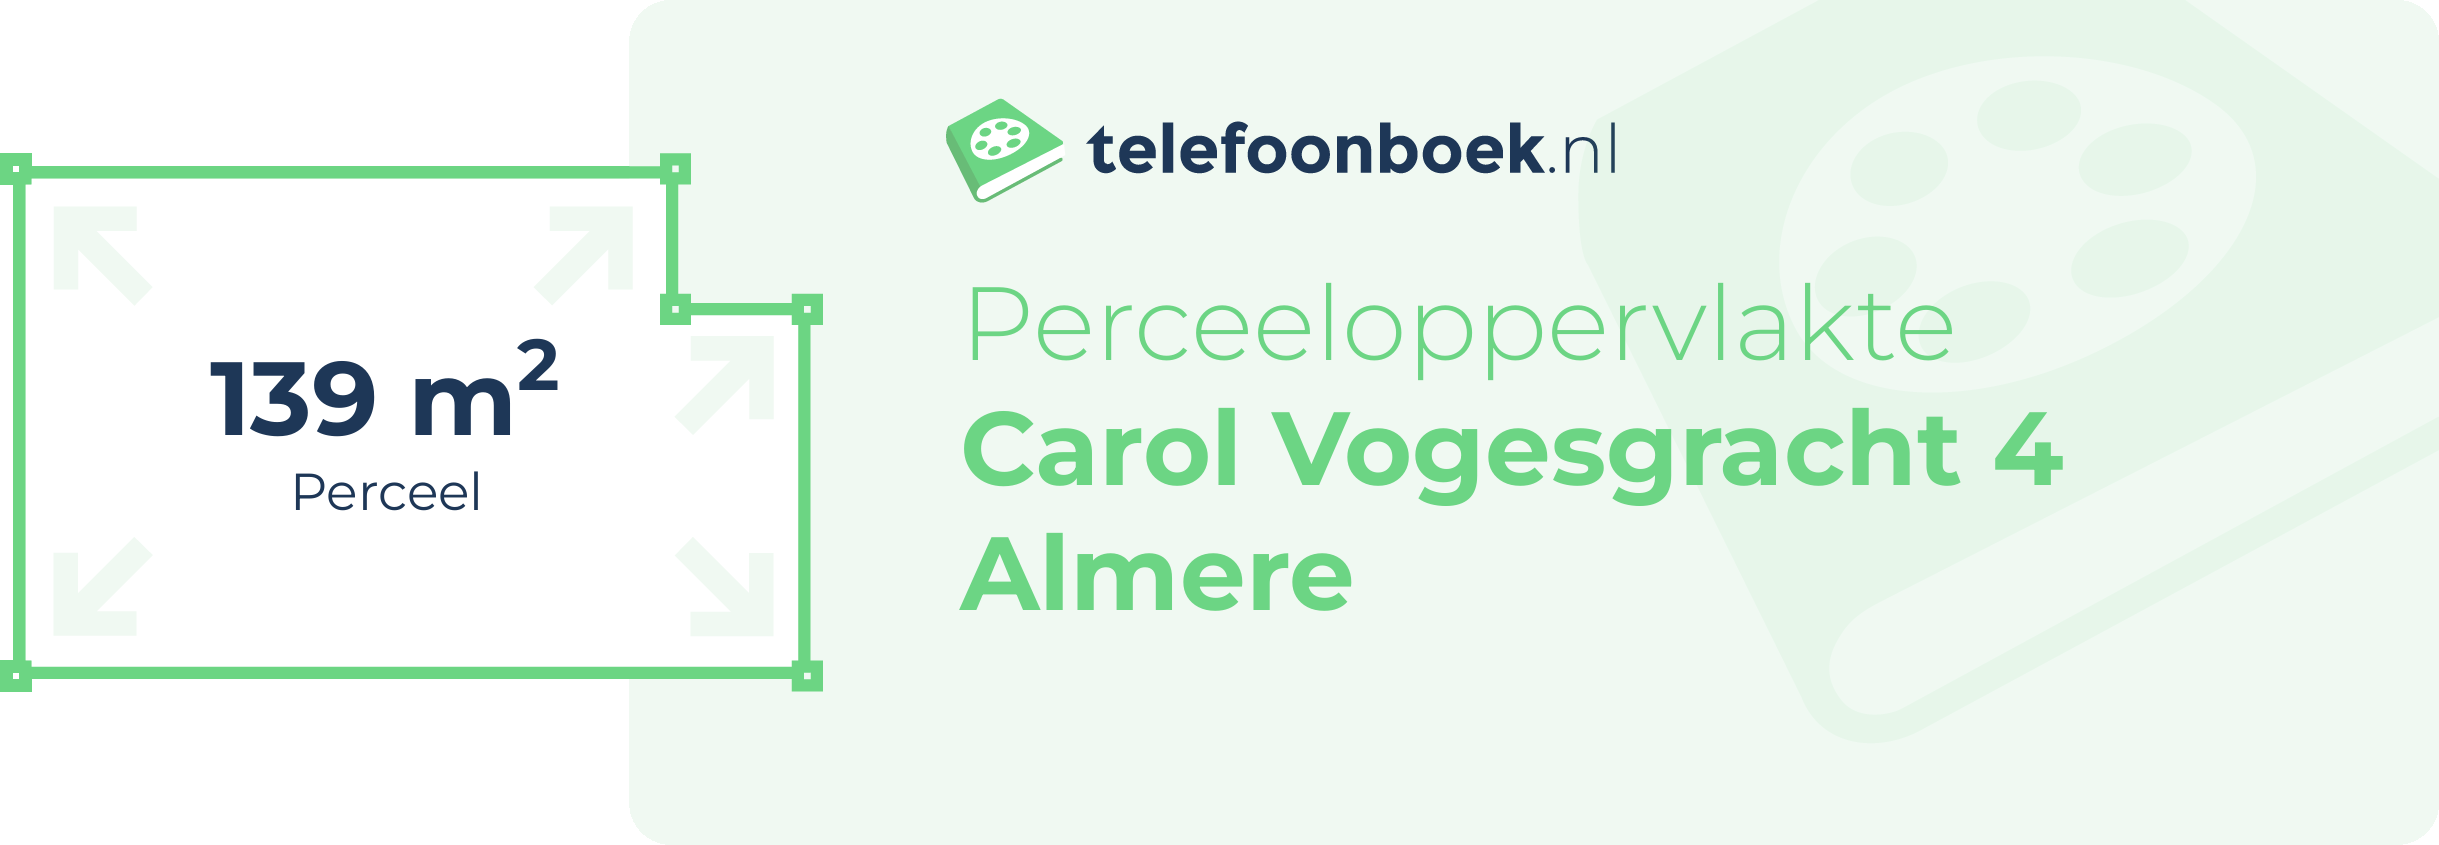 Perceeloppervlakte Carol Vogesgracht 4 Almere